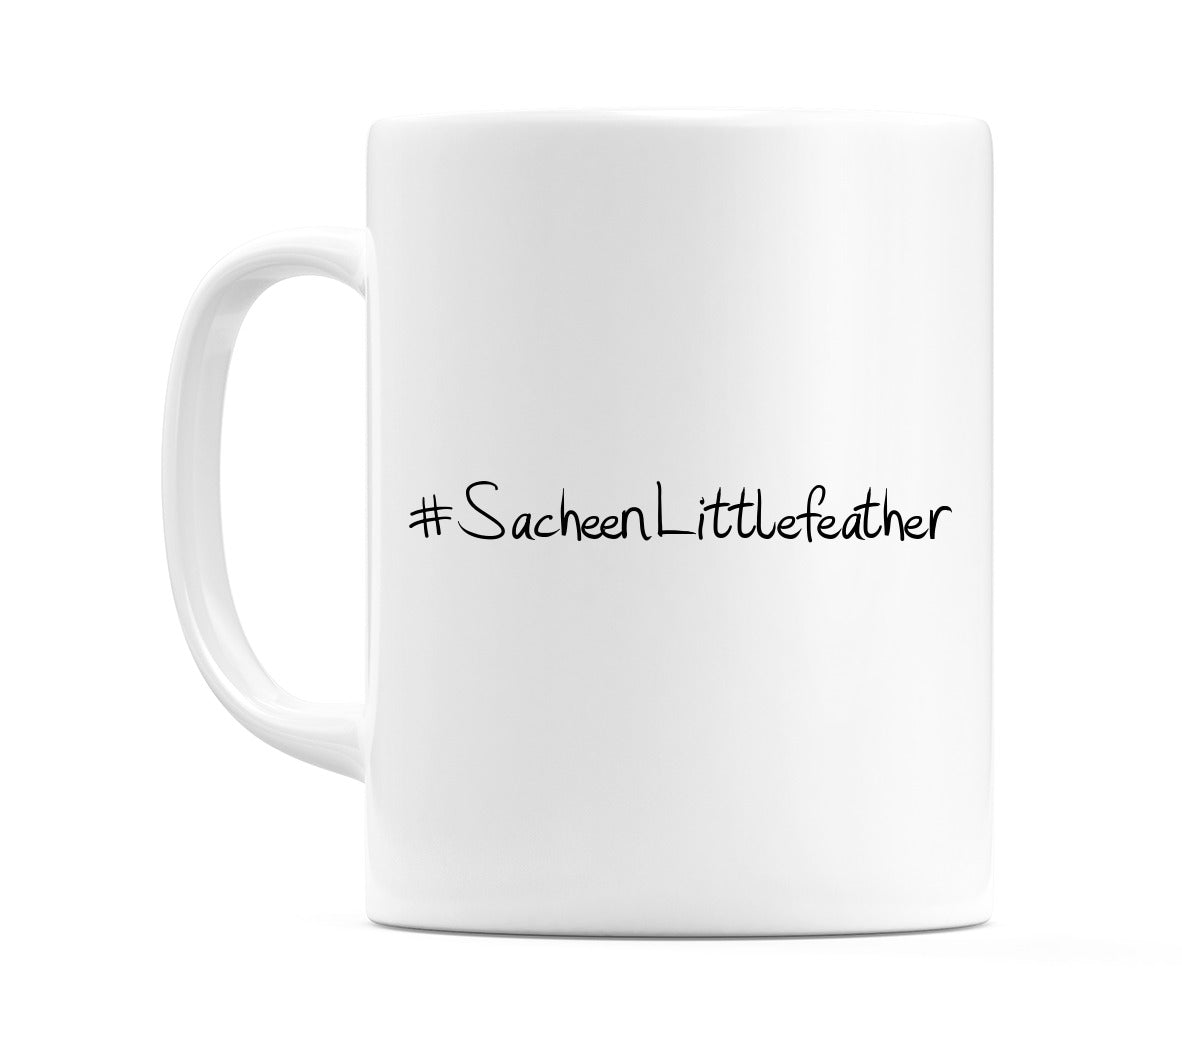 #SacheenLittlefeather Mug